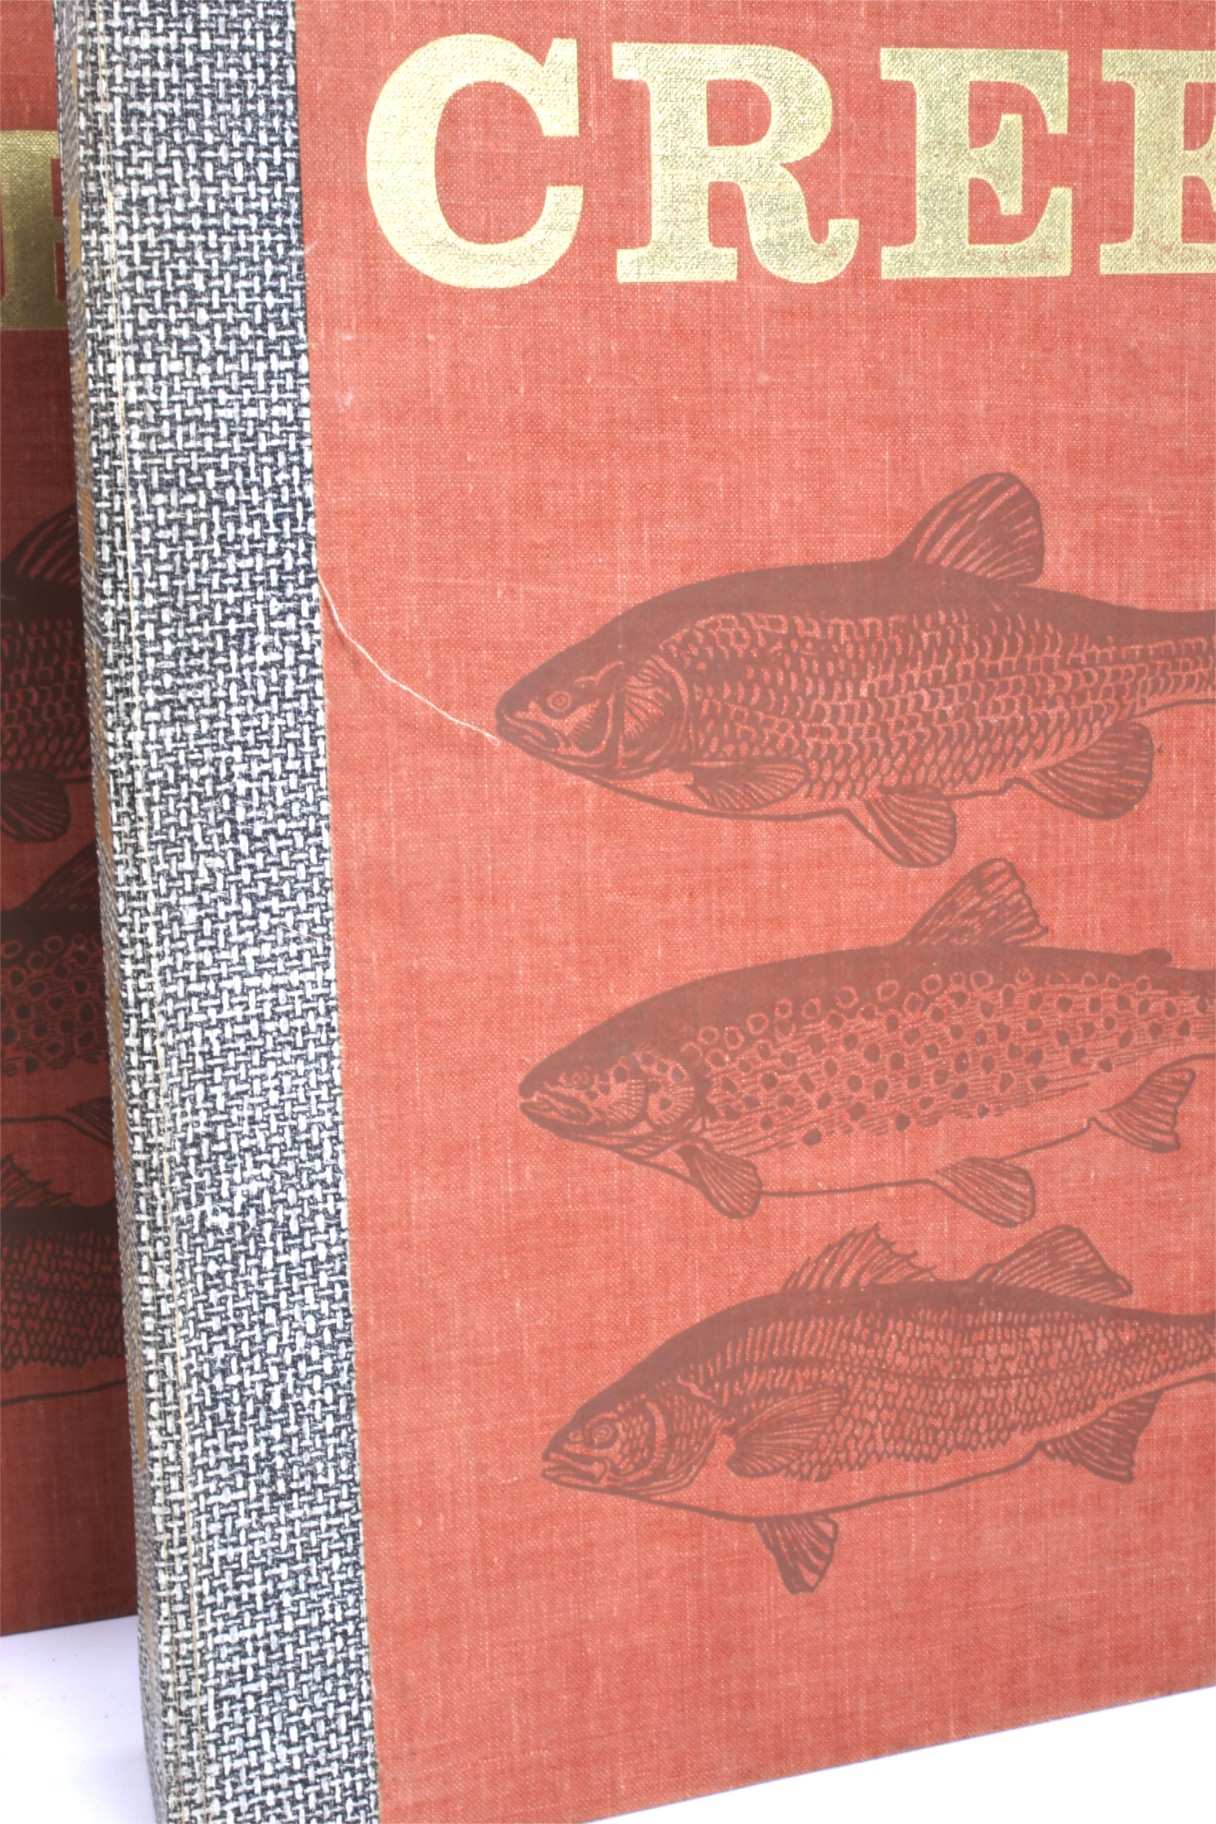 Four custom bound sets of Creel fishing magazines. - Image 4 of 5